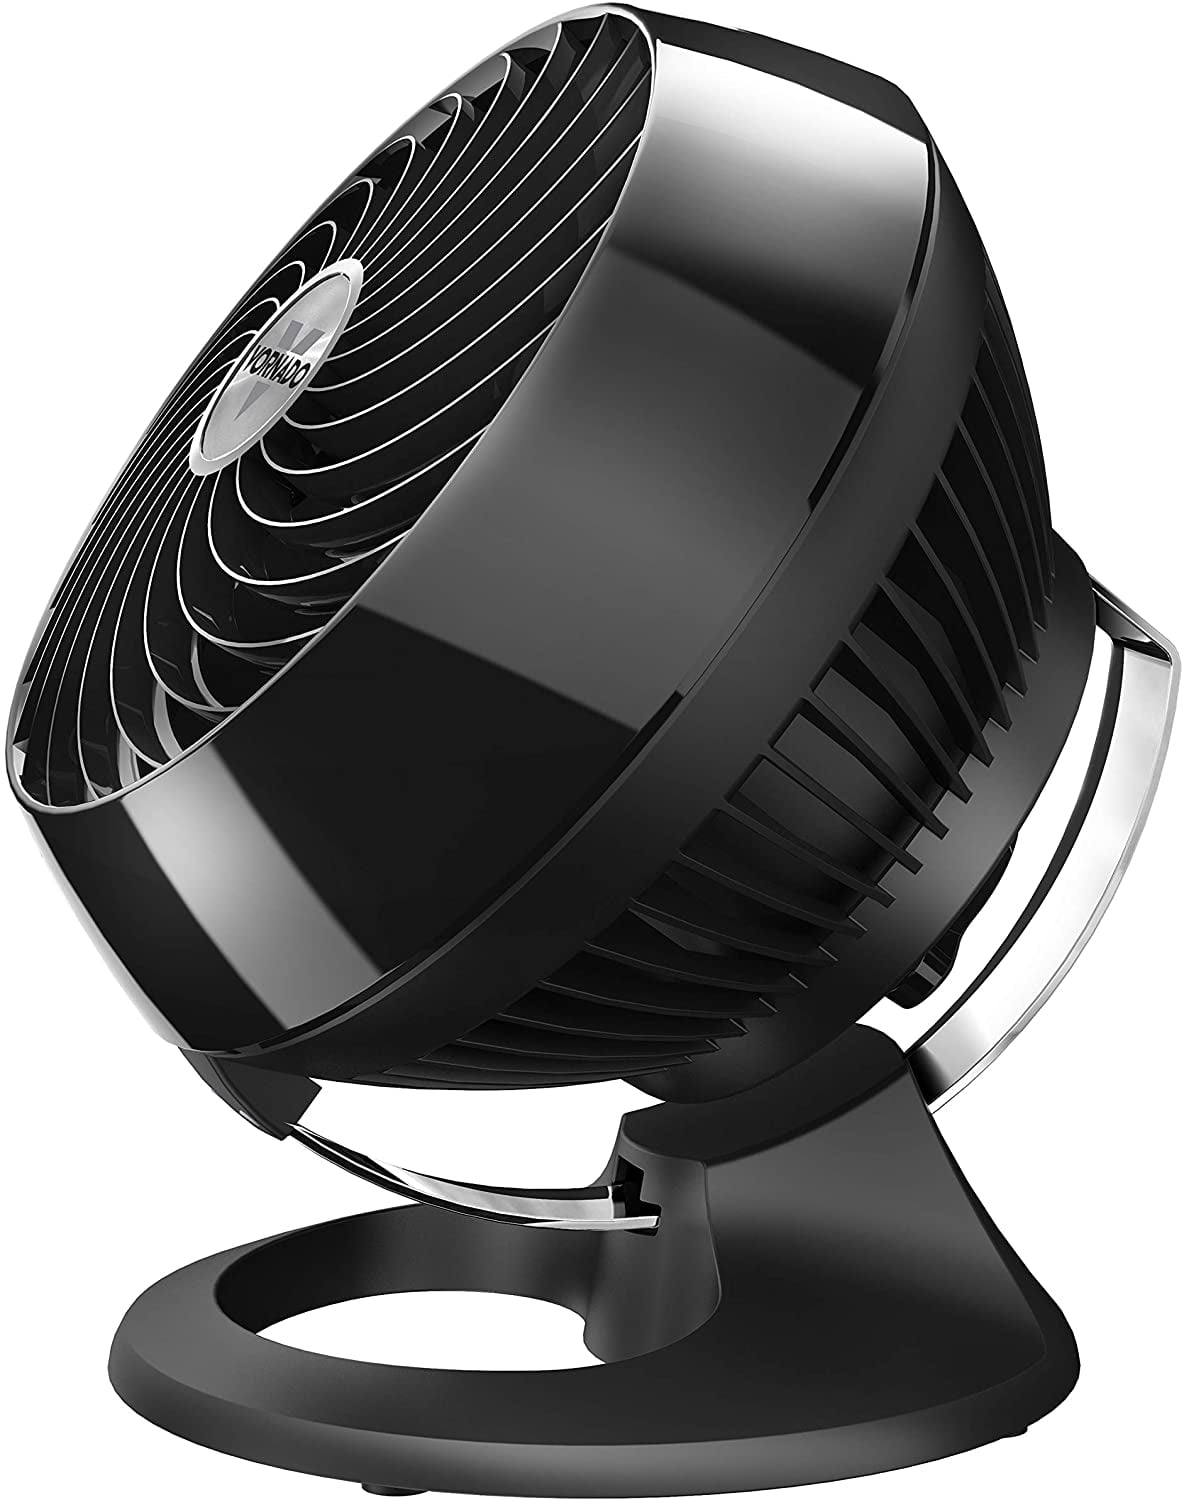 Vornado 133DC Energy Smart Compact Air Circulator Fan with Variable Speed Con...